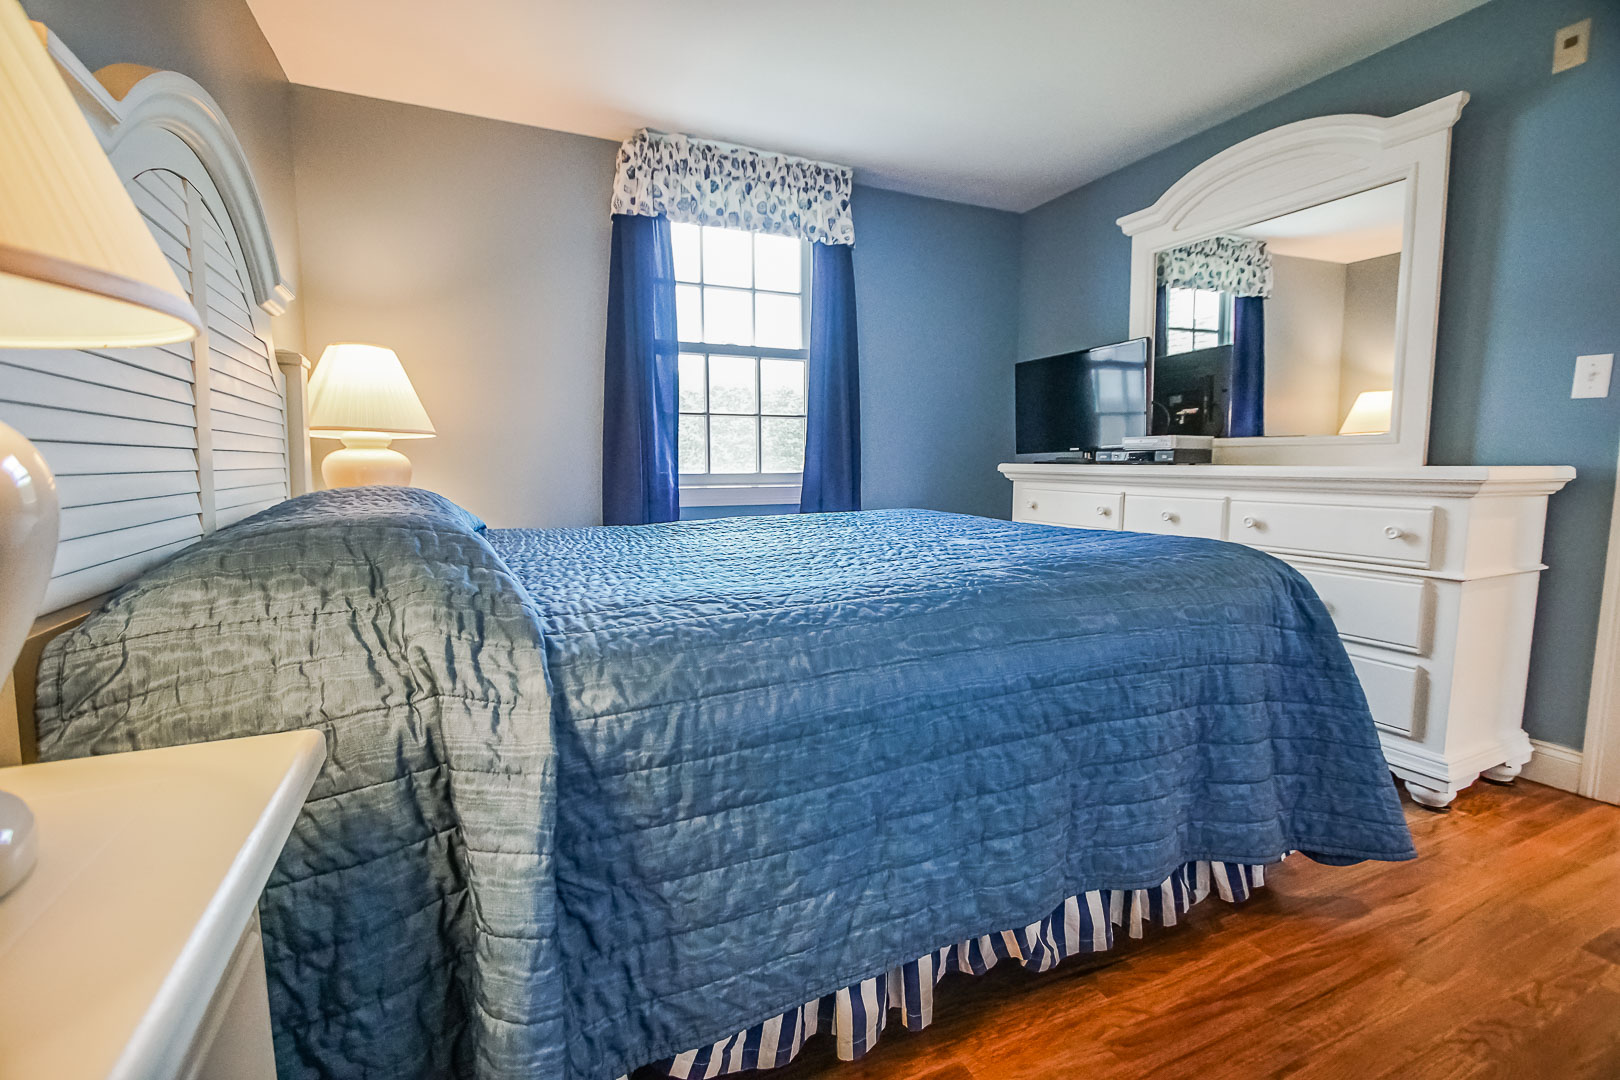 A cozy bedroom at VRI's Beachside Village Resort in Massachusetts.